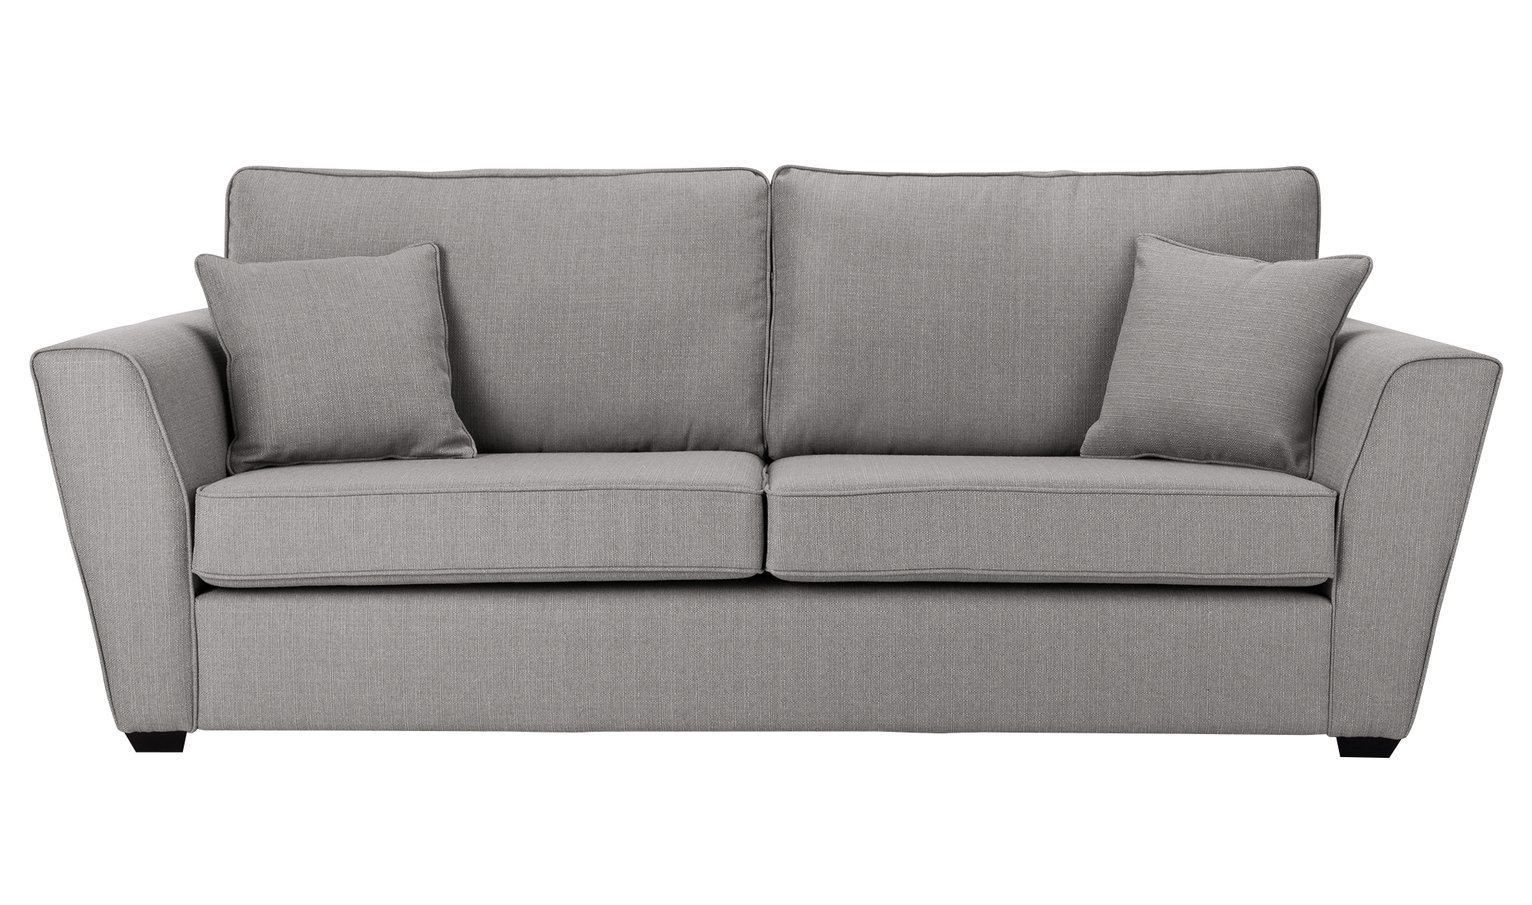 Argos Home Renley 4 Seater Fabric Sofa review